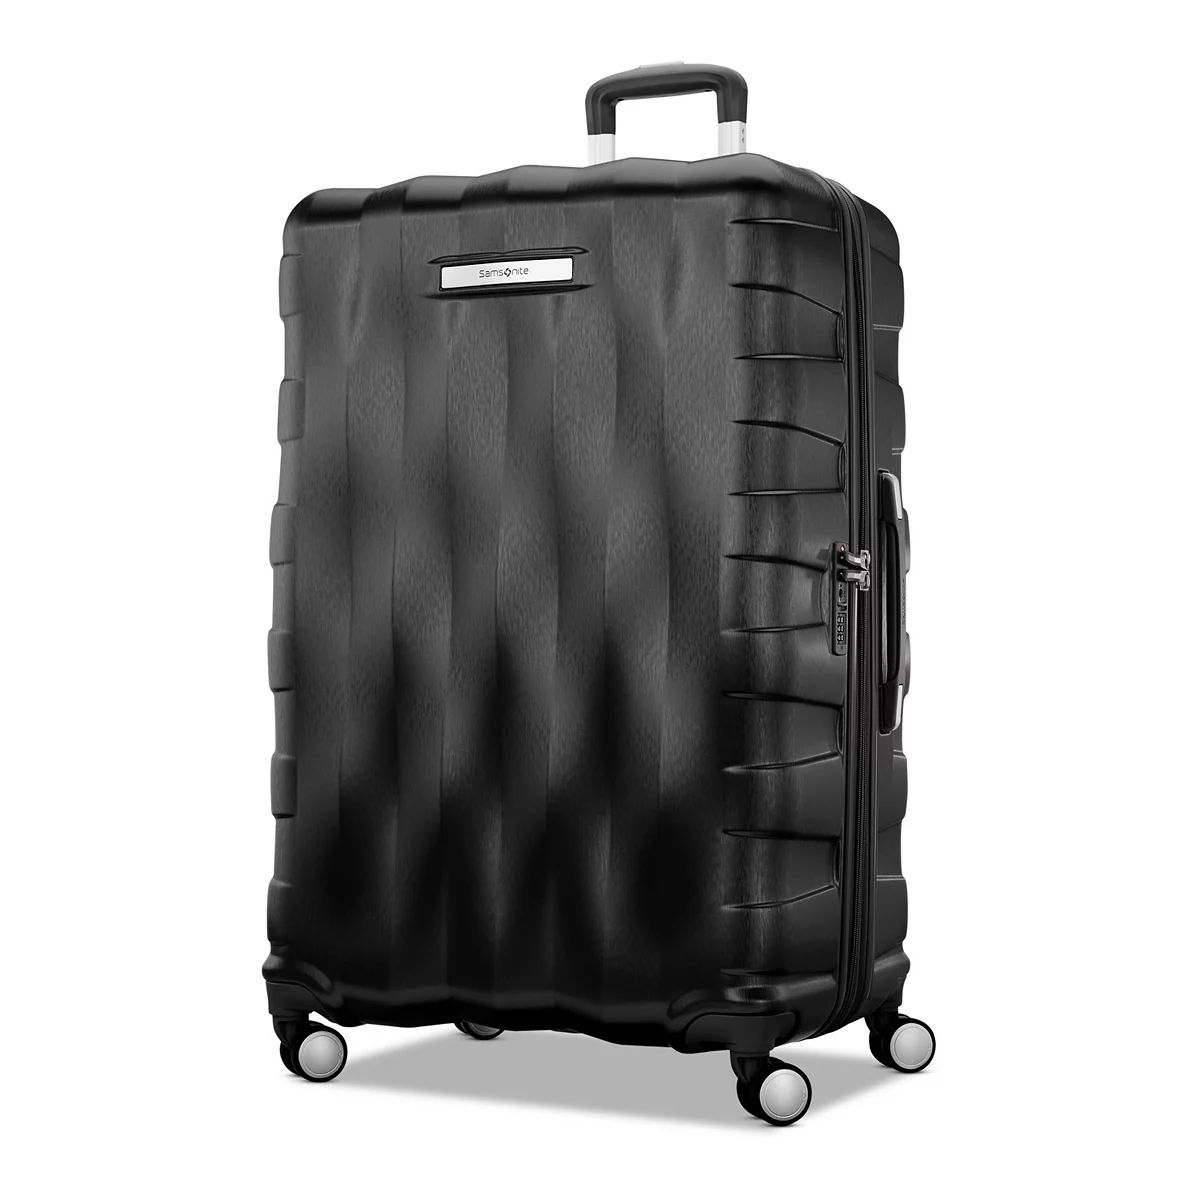 Samsonite Ziplite 6 Hardside Spinner Luggage | Kohl's